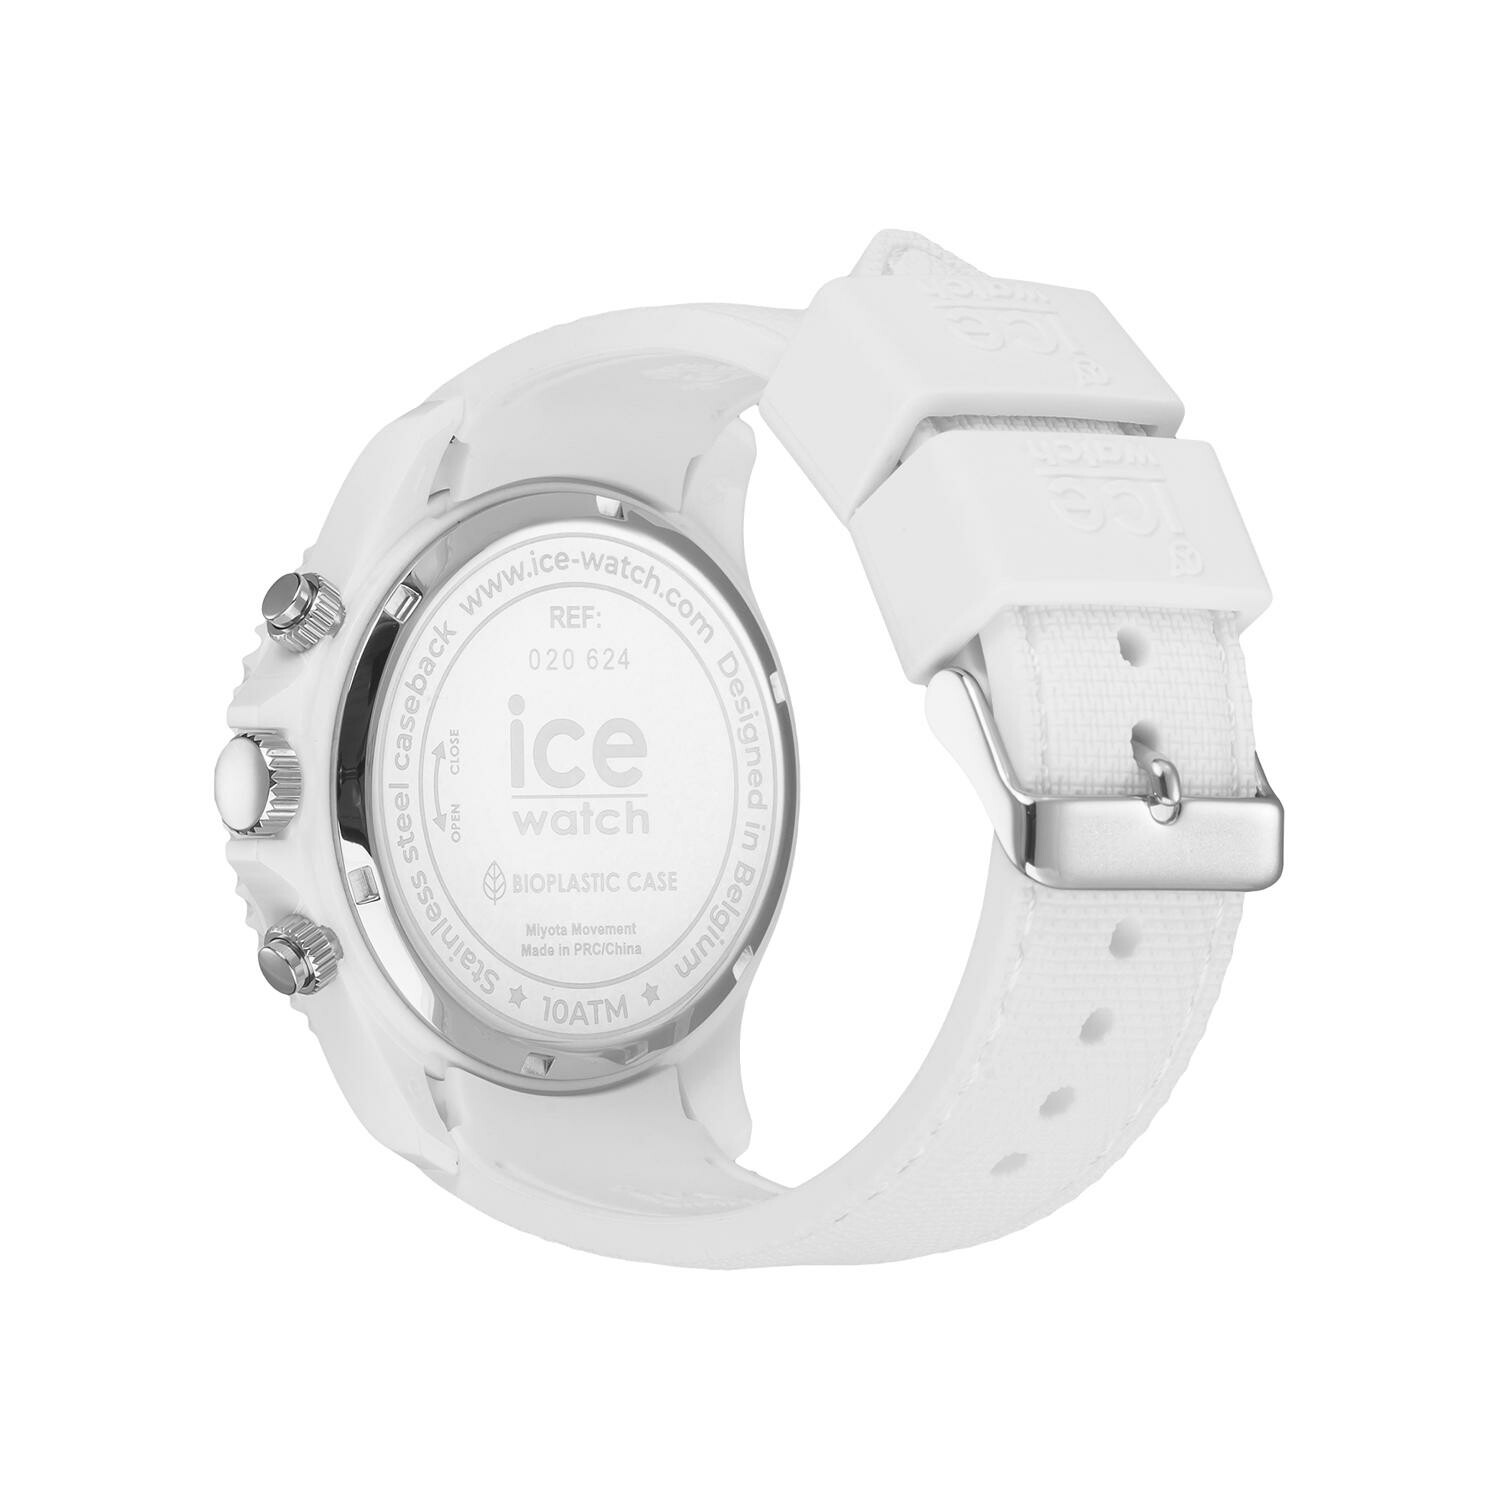 Achat Montre Ice-Watch ICE chrono White blue 020624